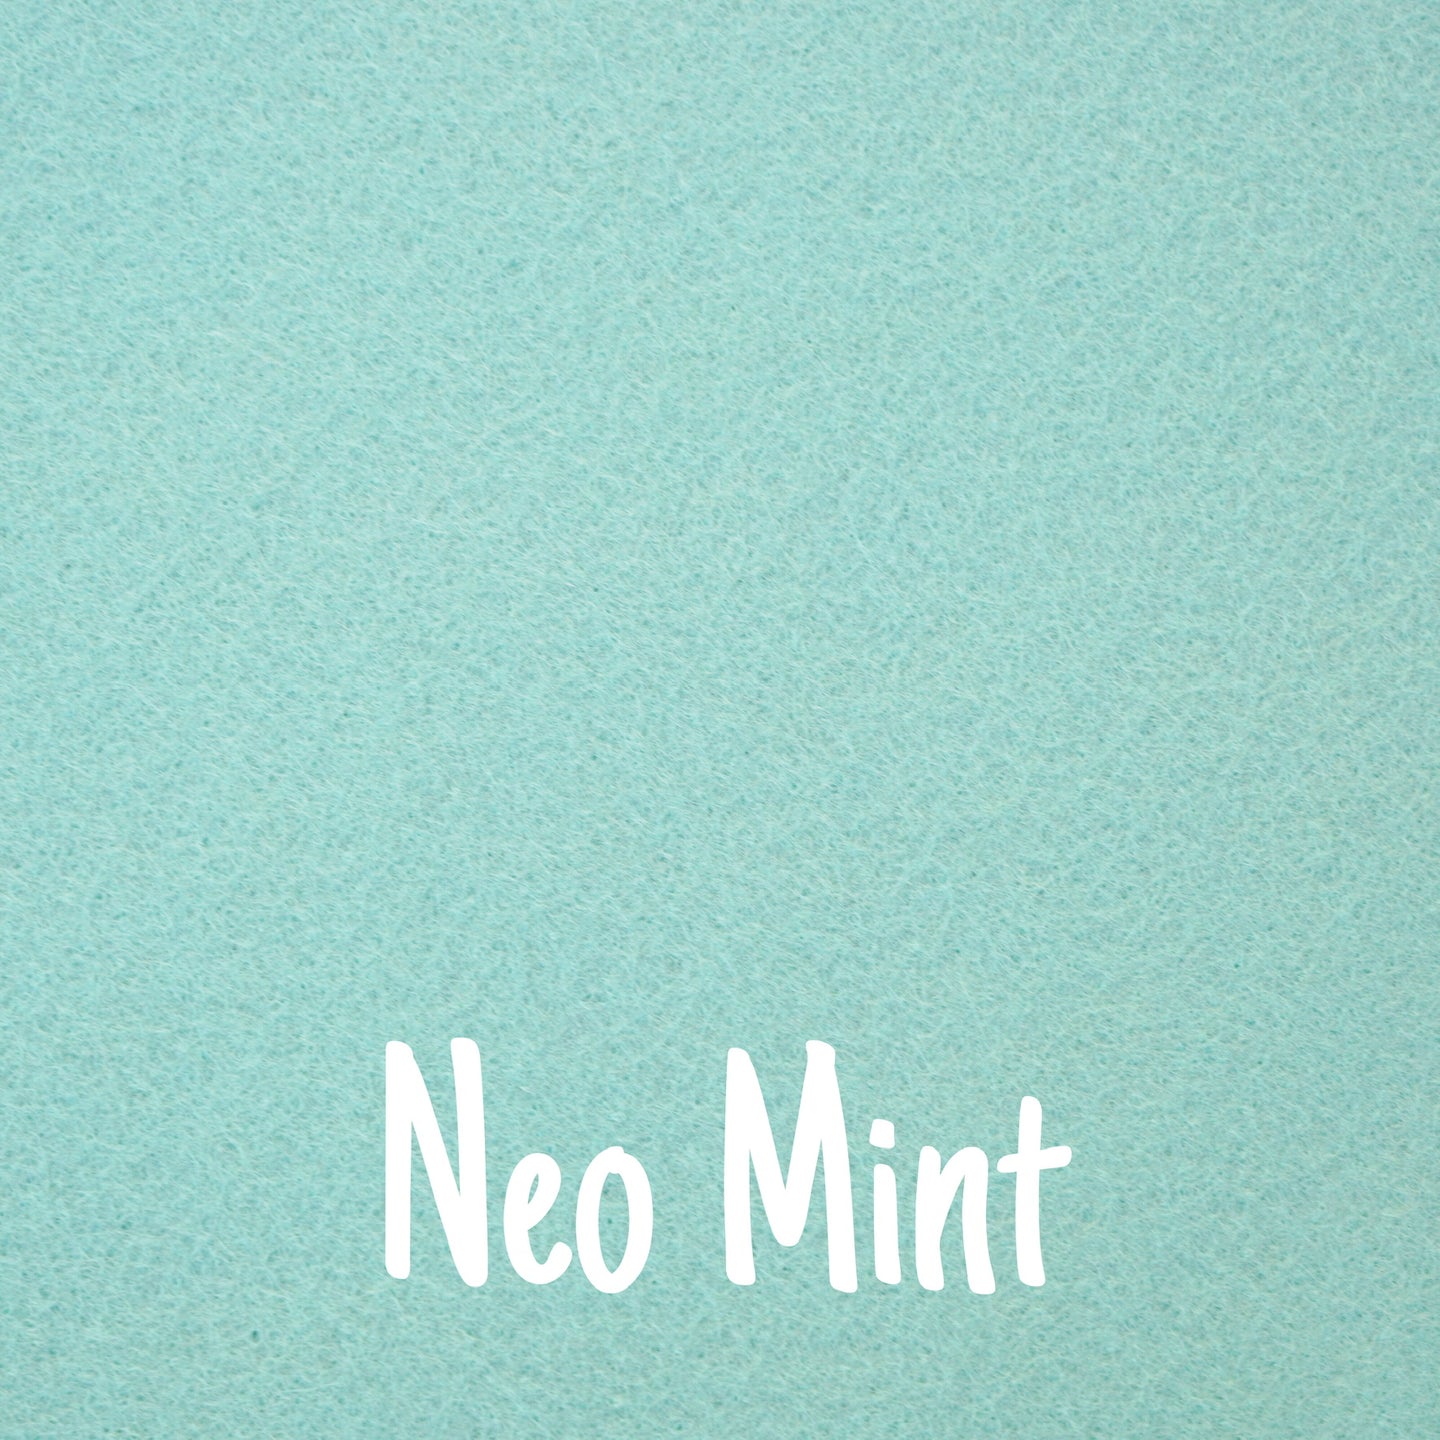 Neo Mint Wool Blend Felt